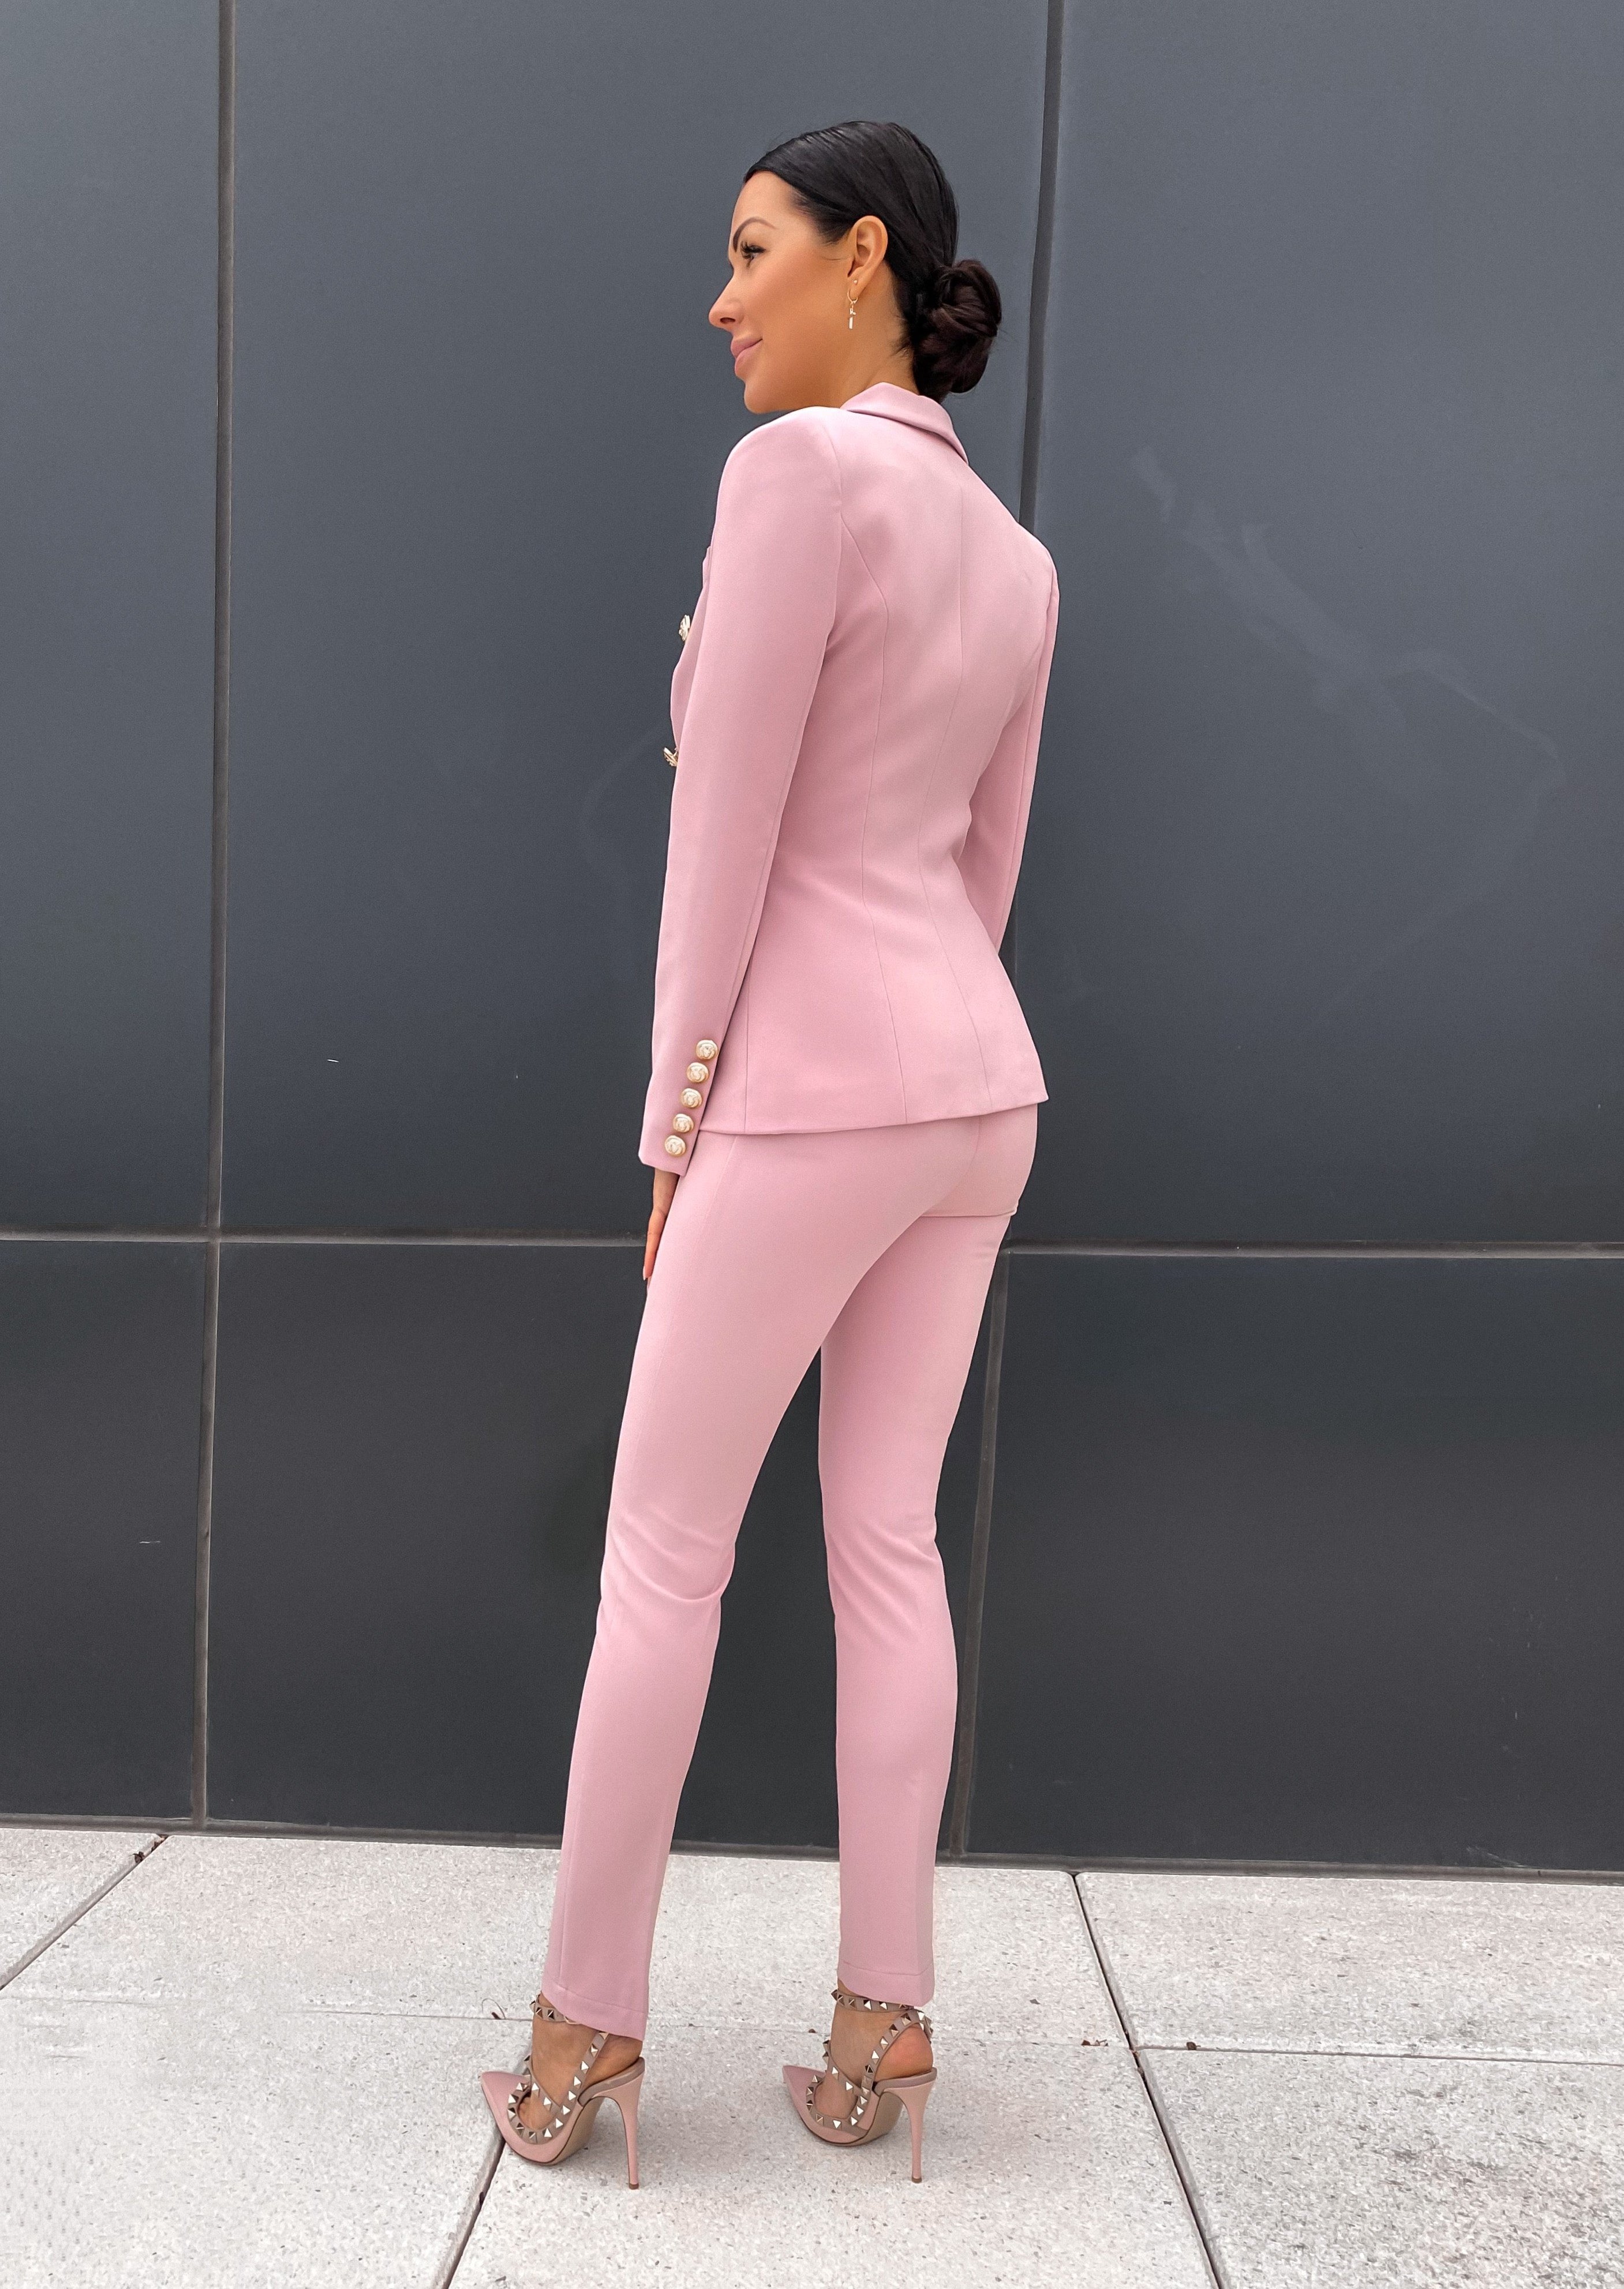 Light Pink Pant Suit for Women, Pink Pant Suit Set for Women